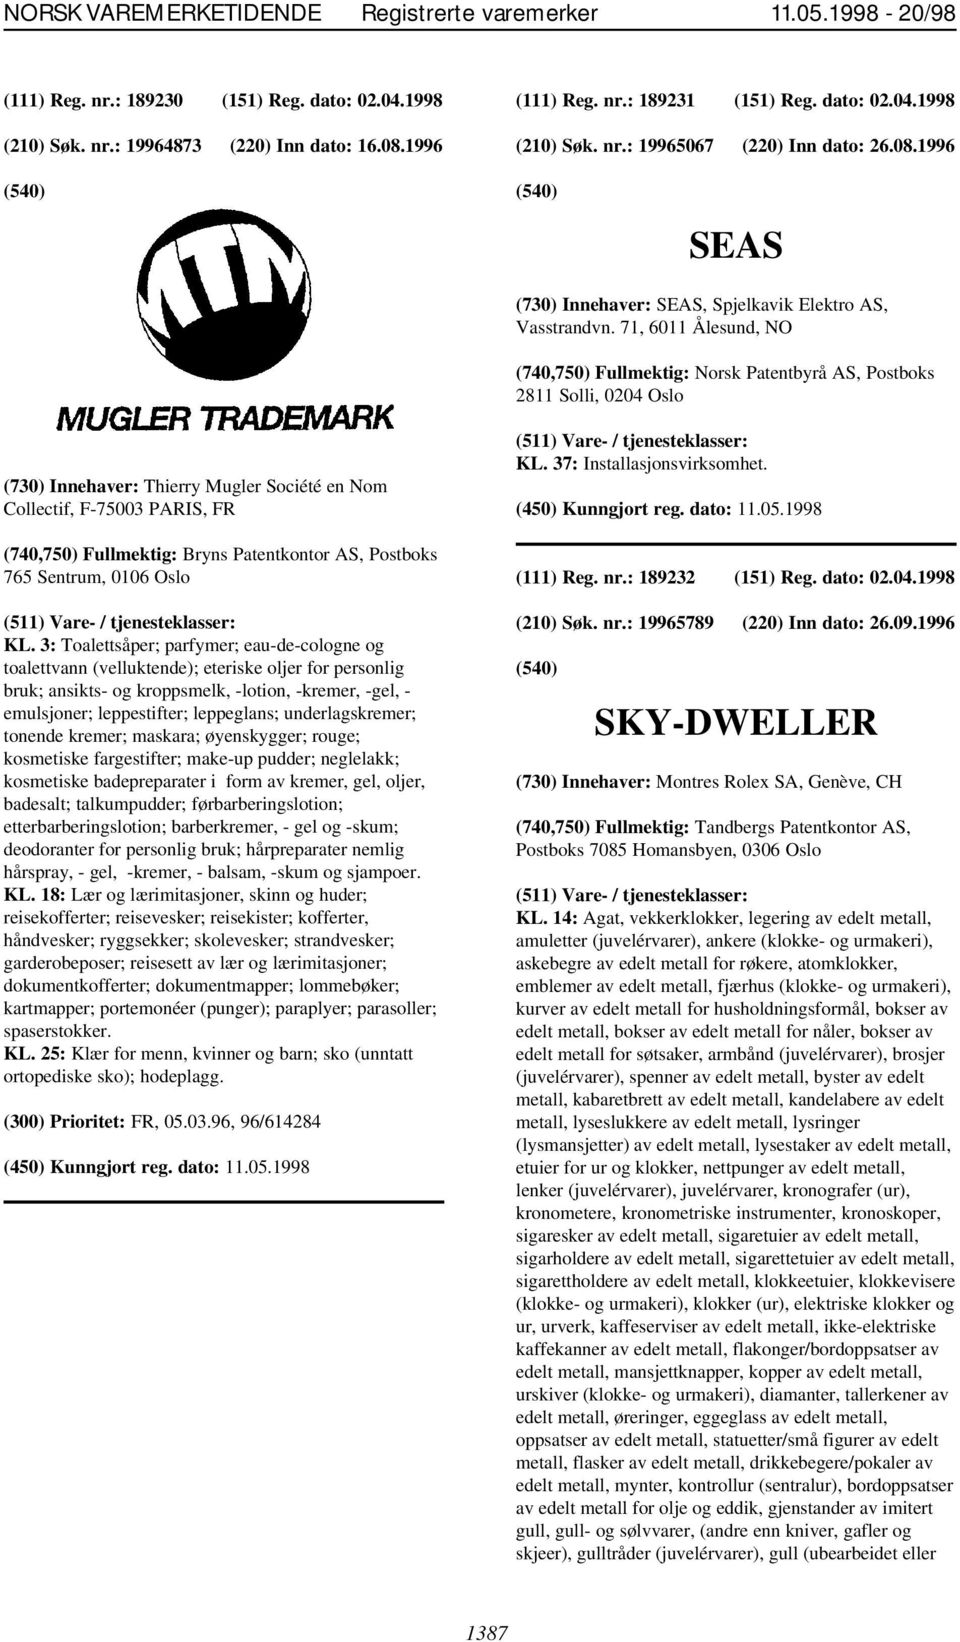 71, 6011 Ålesund, NO (740,750) Fullmektig: Norsk Patentbyrå AS, Postboks 2811 Solli, 0204 Oslo (730) Innehaver: Thierry Mugler Société en Nom Collectif, F-75003 PARIS, FR KL.